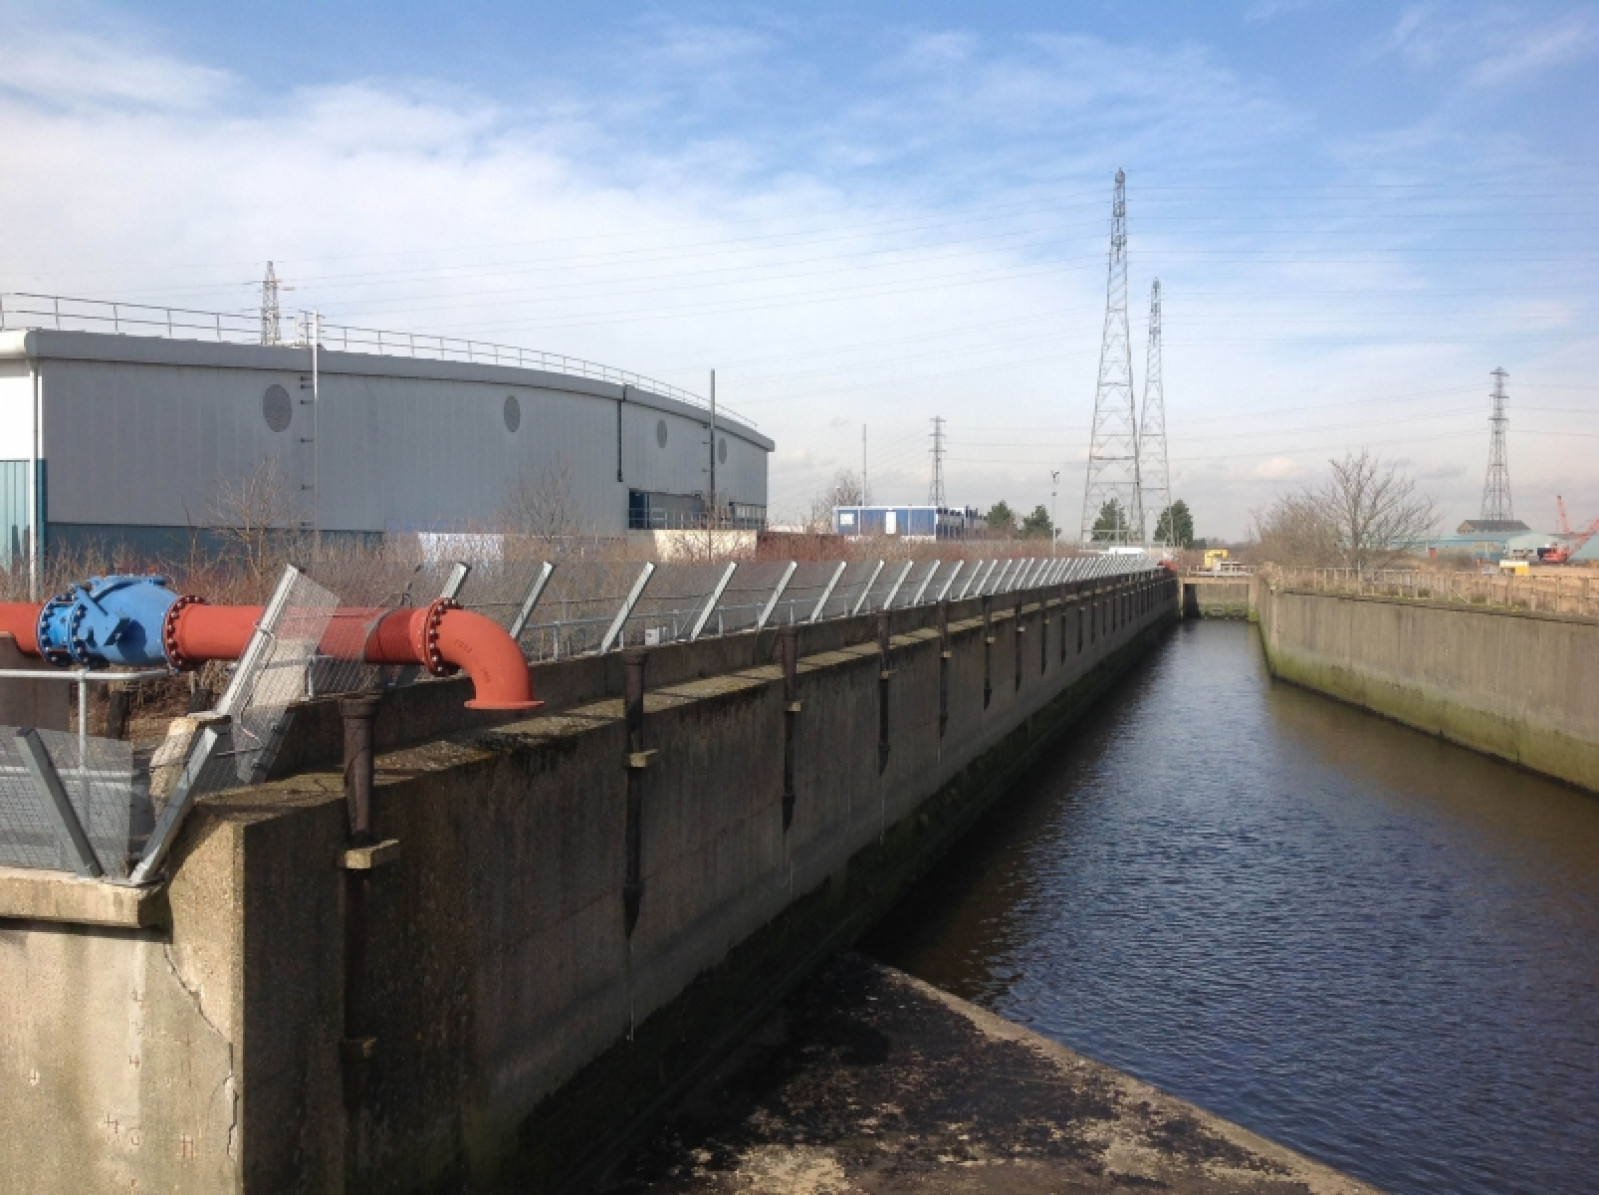 Thames Water extends Zaun contract